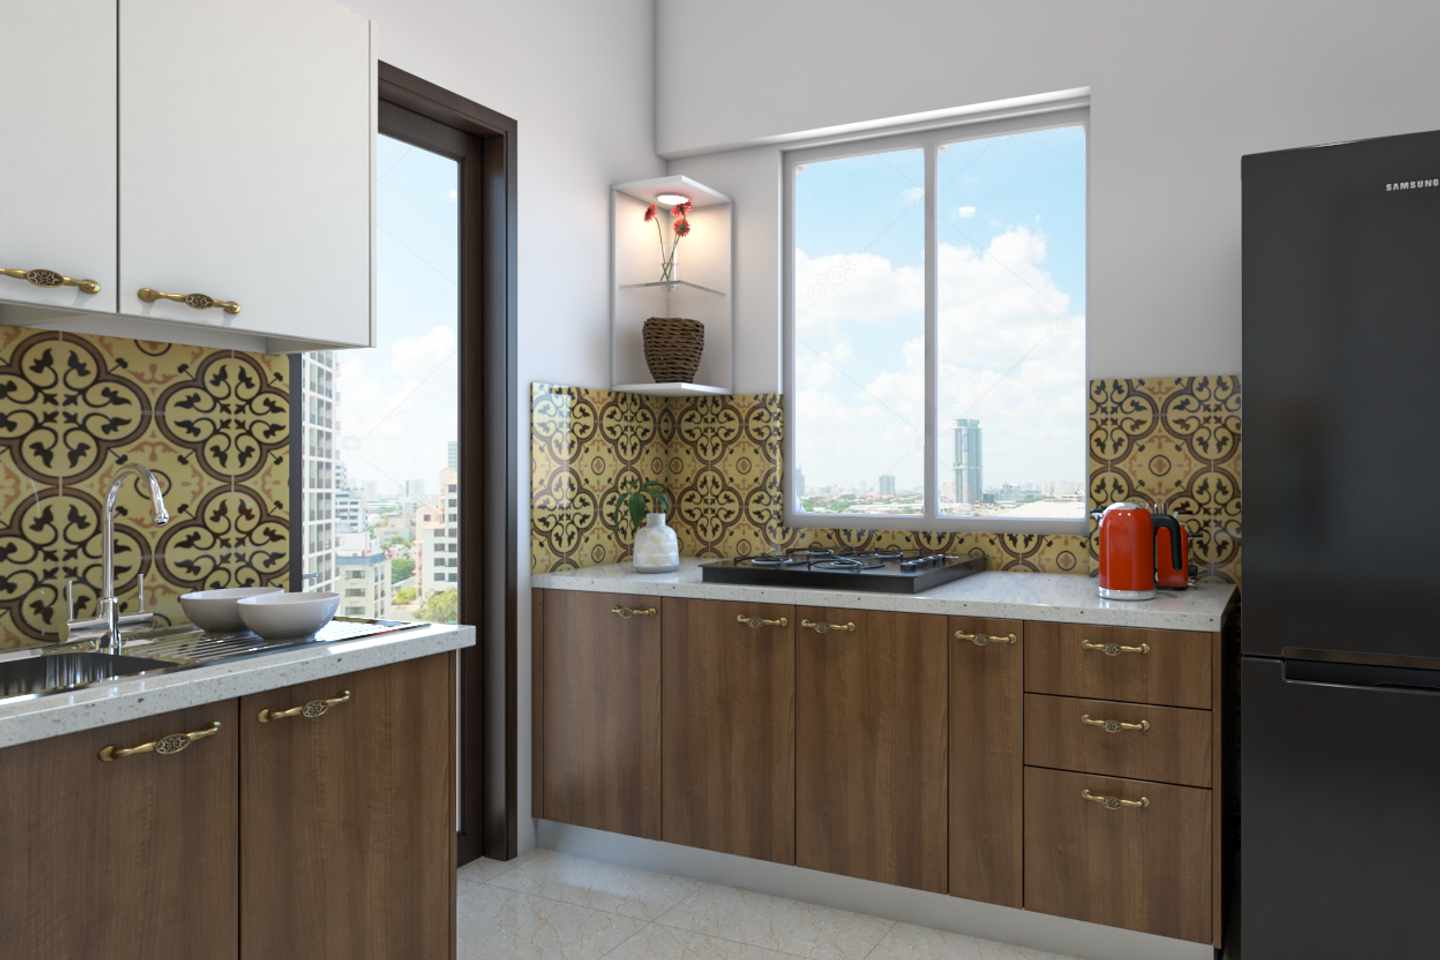 Kitchen Cabinet Design With Wooden Laminates – Livspace